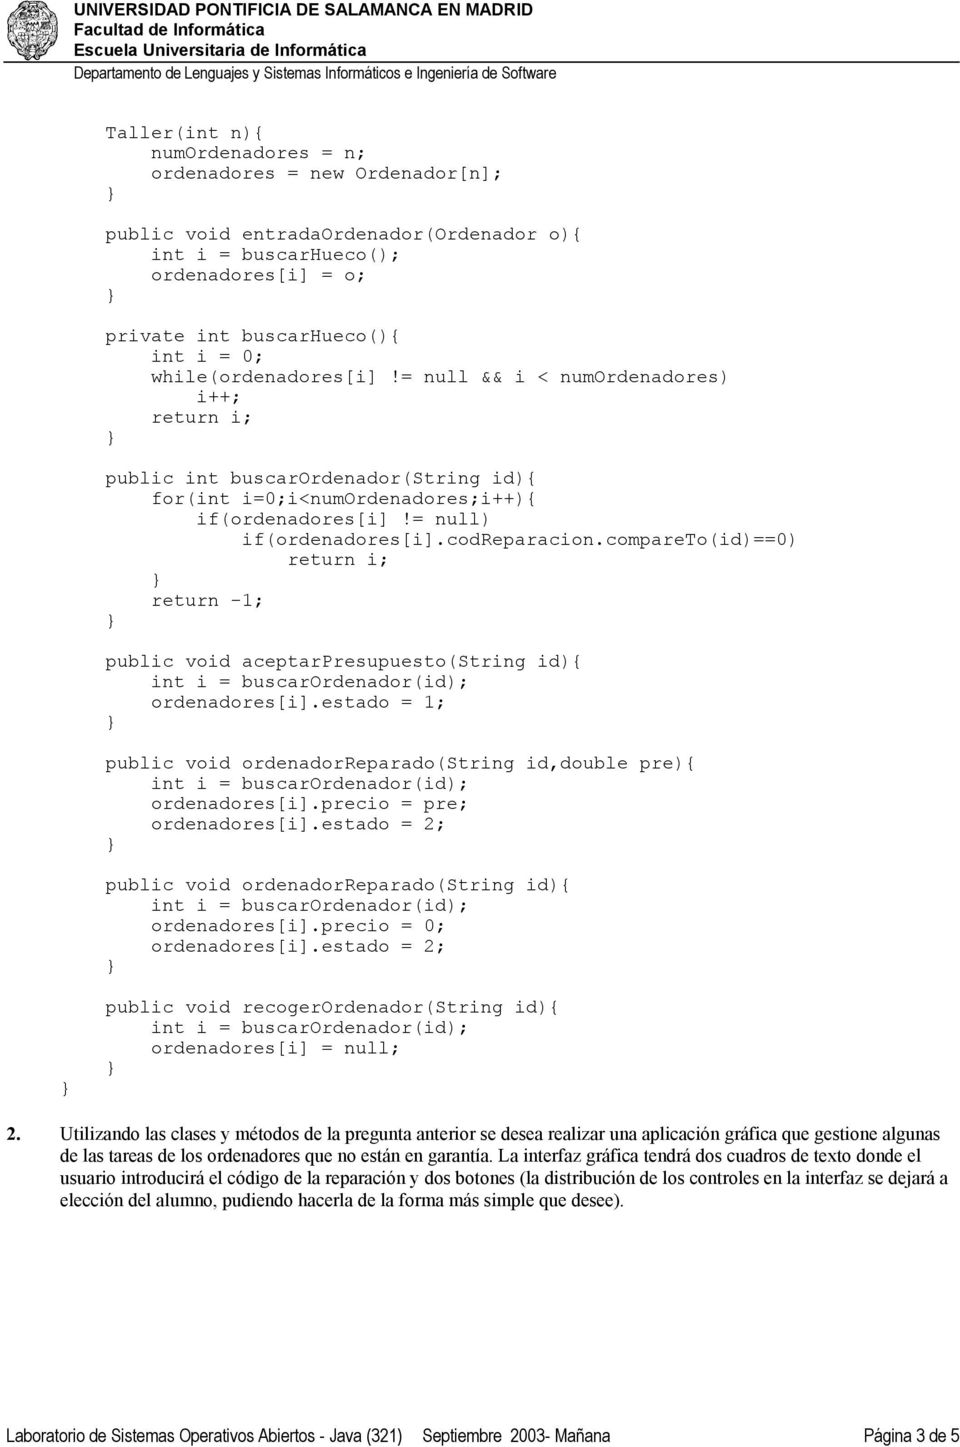 compareto(id)==0) return i; return -1; public void aceptarpresupuesto(string id){ ordenadores[i].estado = 1; public void ordenadorreparado(string id,double pre){ ordenadores[i].